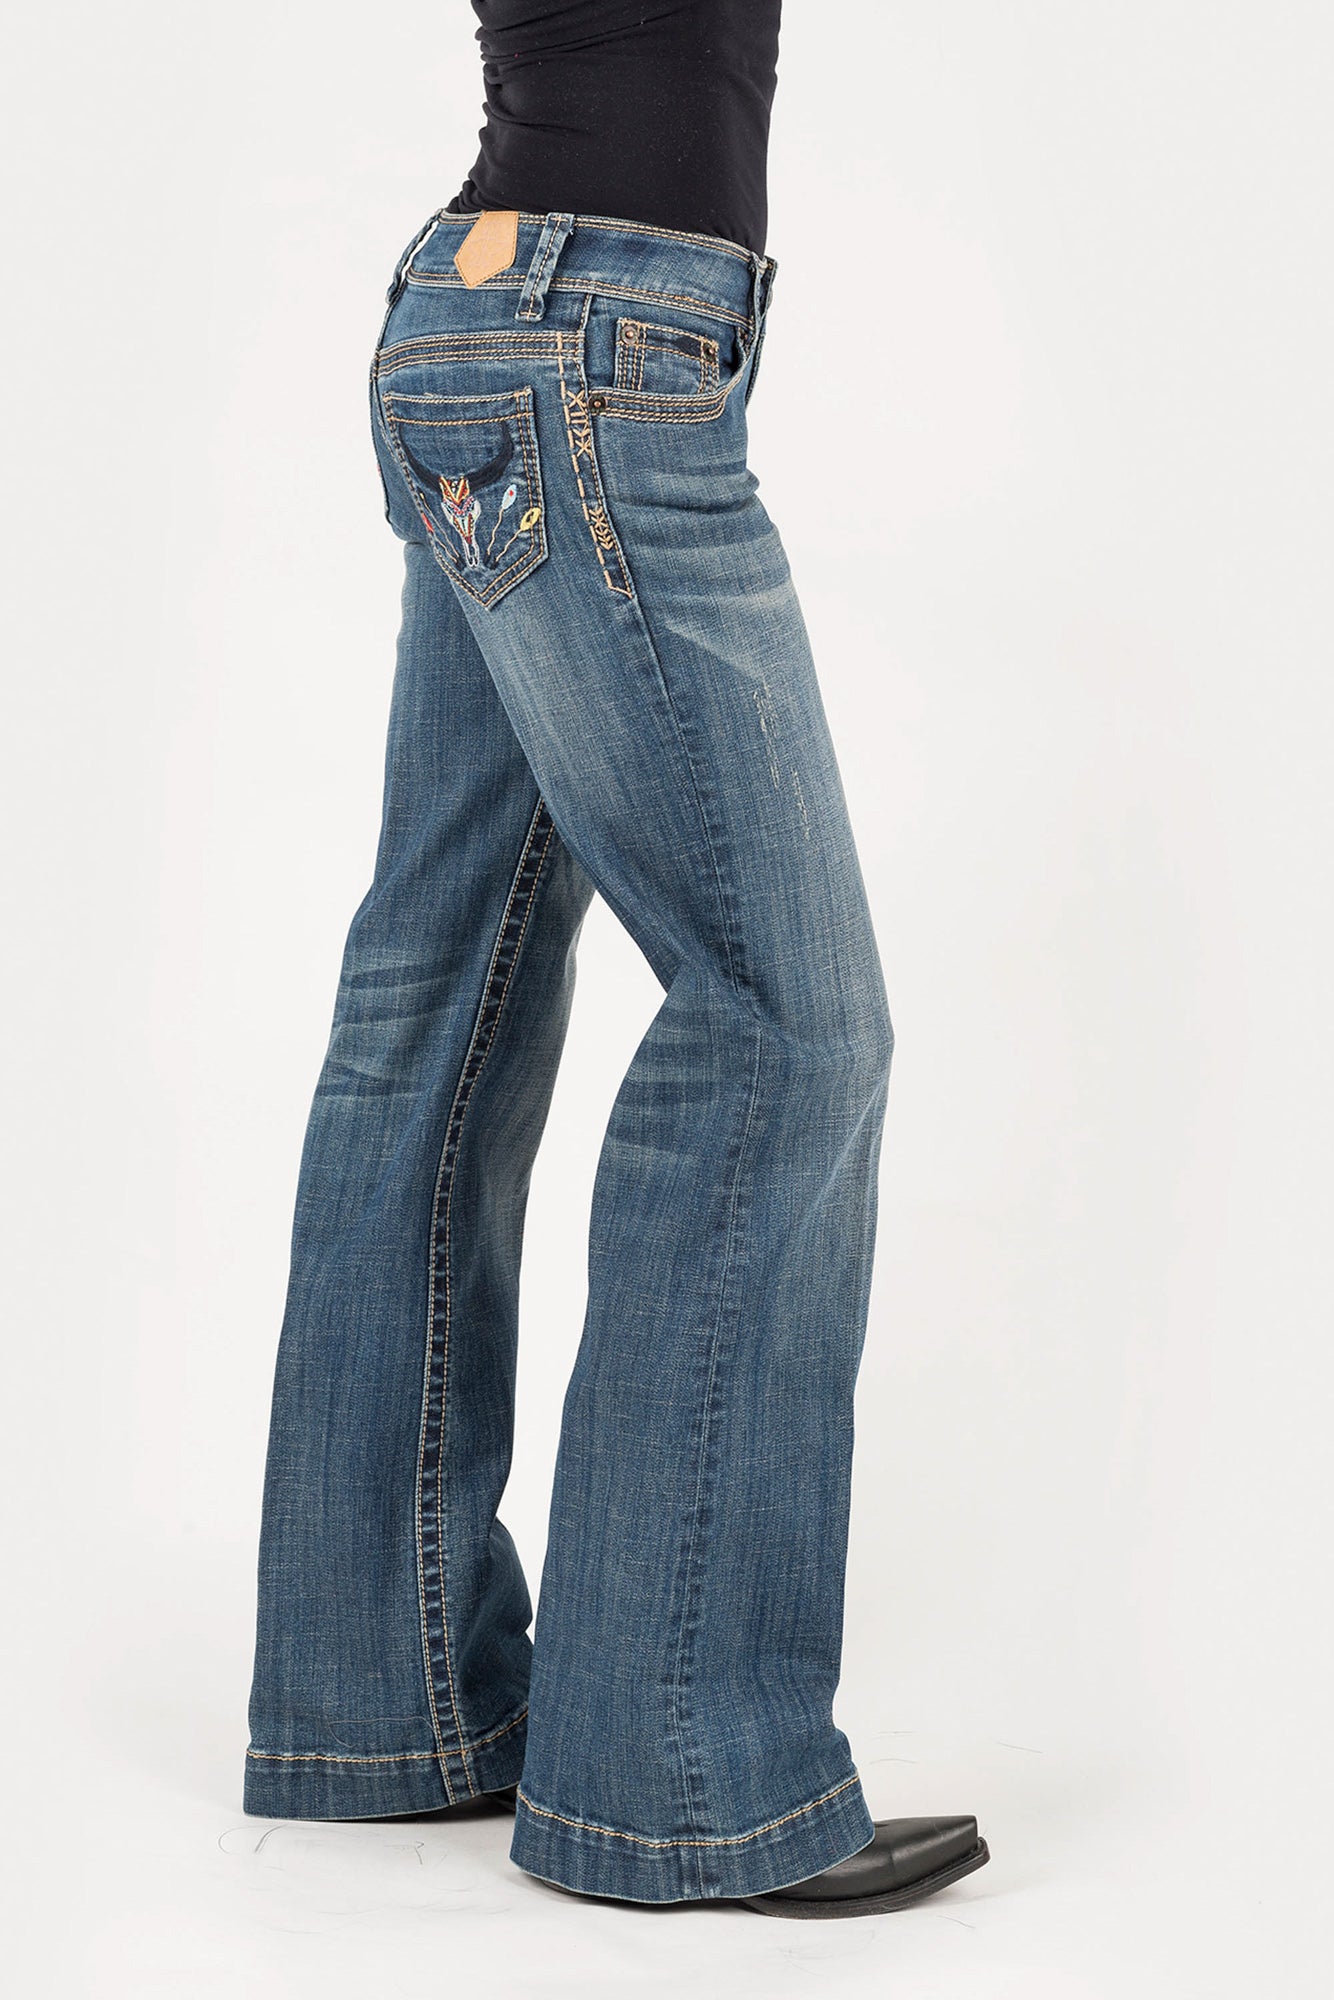 Tin Haul Womens Blue Cotton Blend Steerhead Deco Jeans – The Western ...